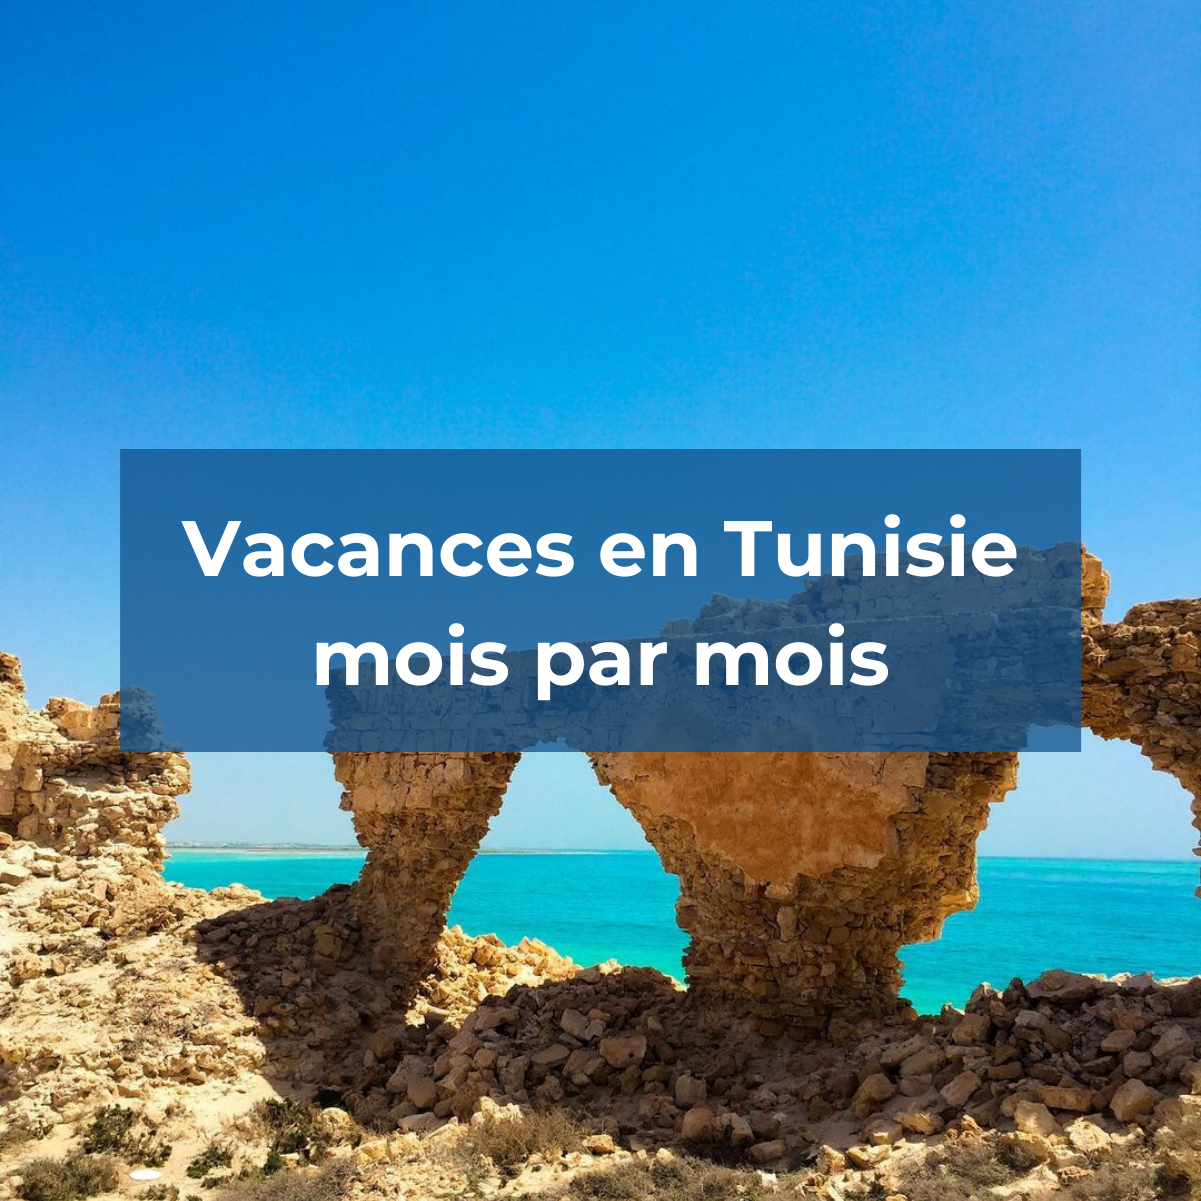 Vacances en Tunisie : L'île des rêves Djerba © Instagram @ramyjaballah